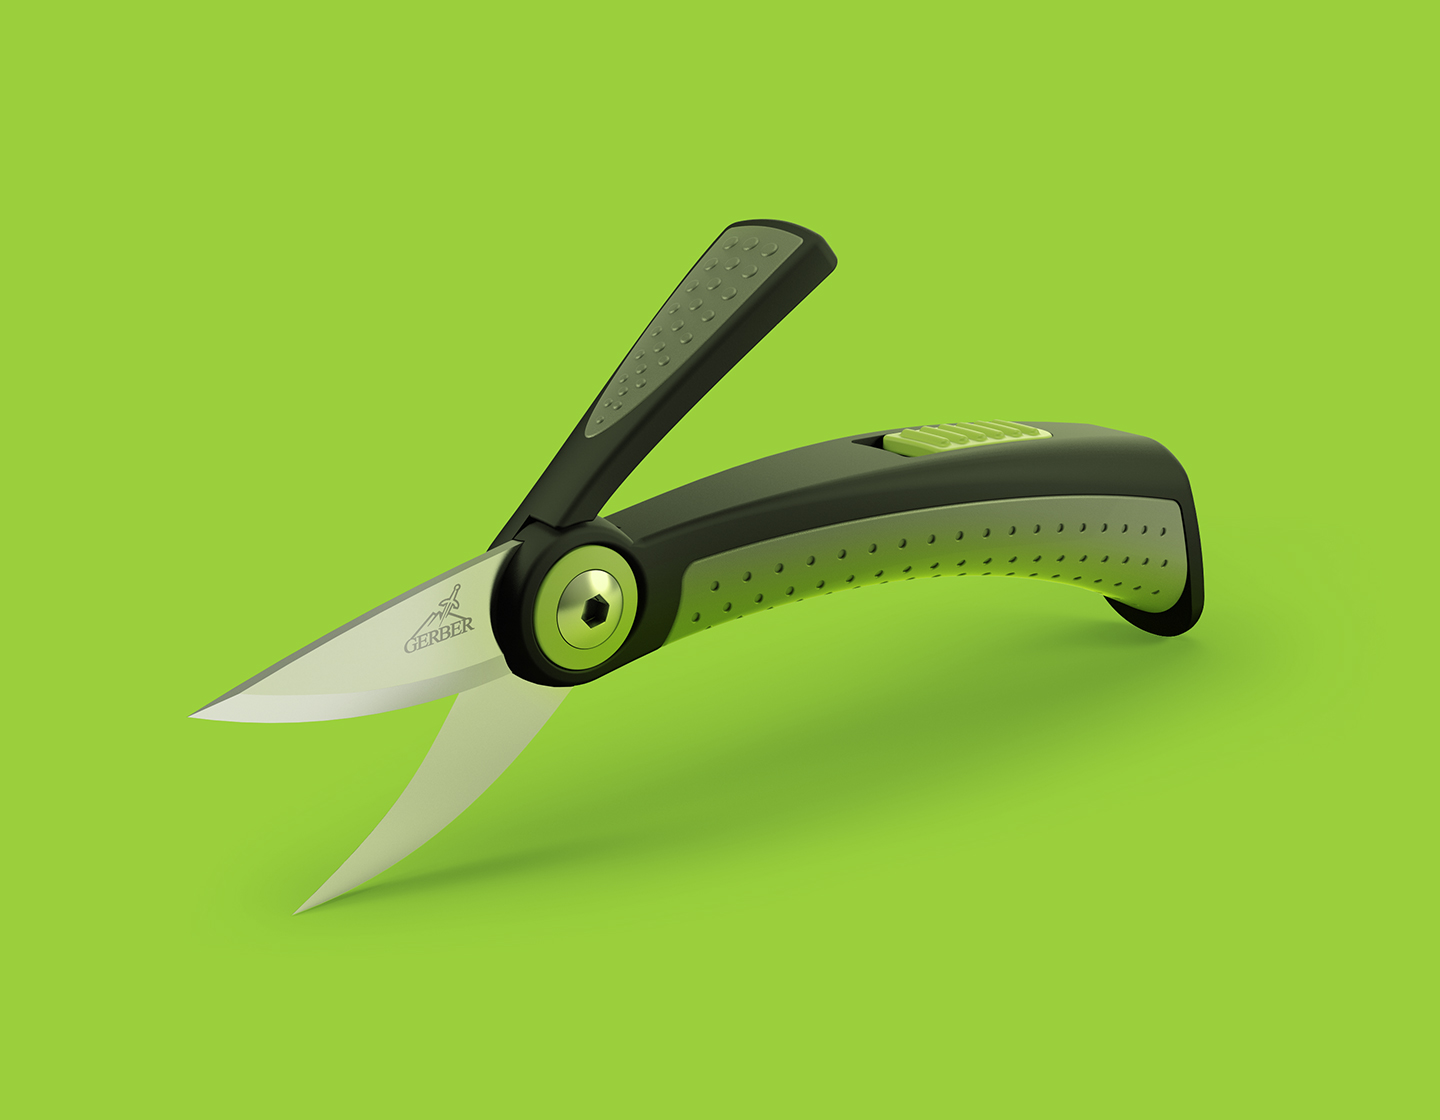 Gerber werksdesign industrial design scissors knife product